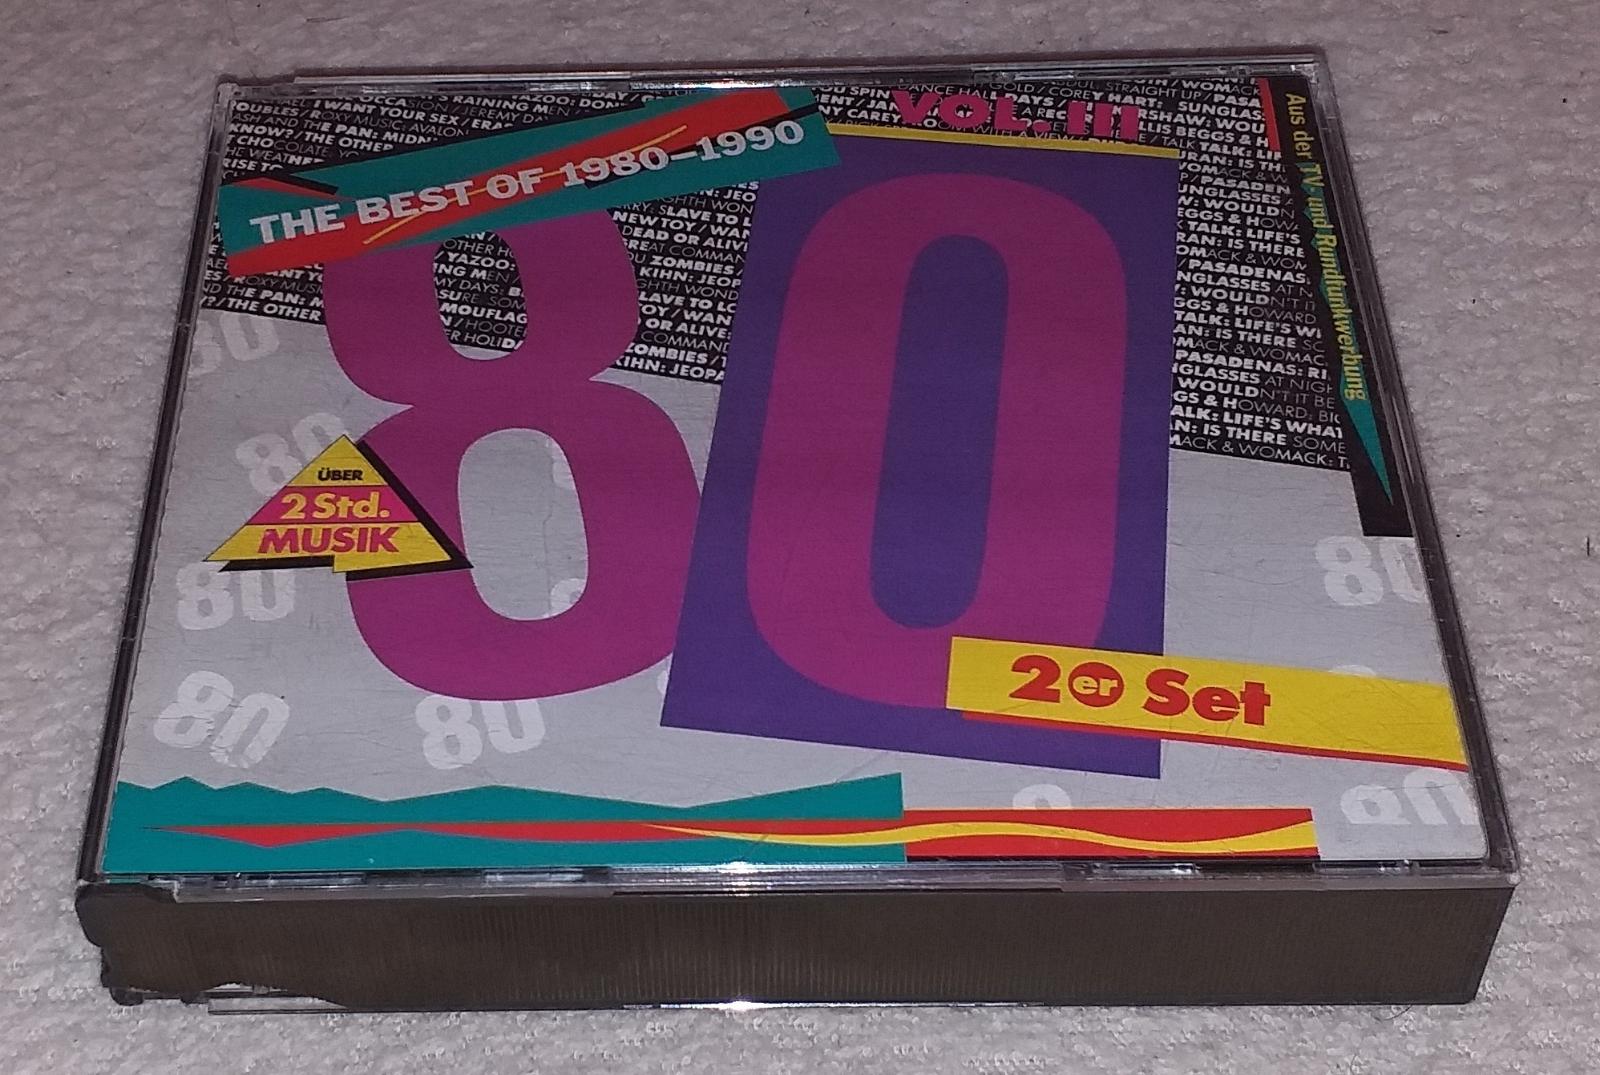 2 x CD The Best Of 1980-1990 Vol. III - Hudba